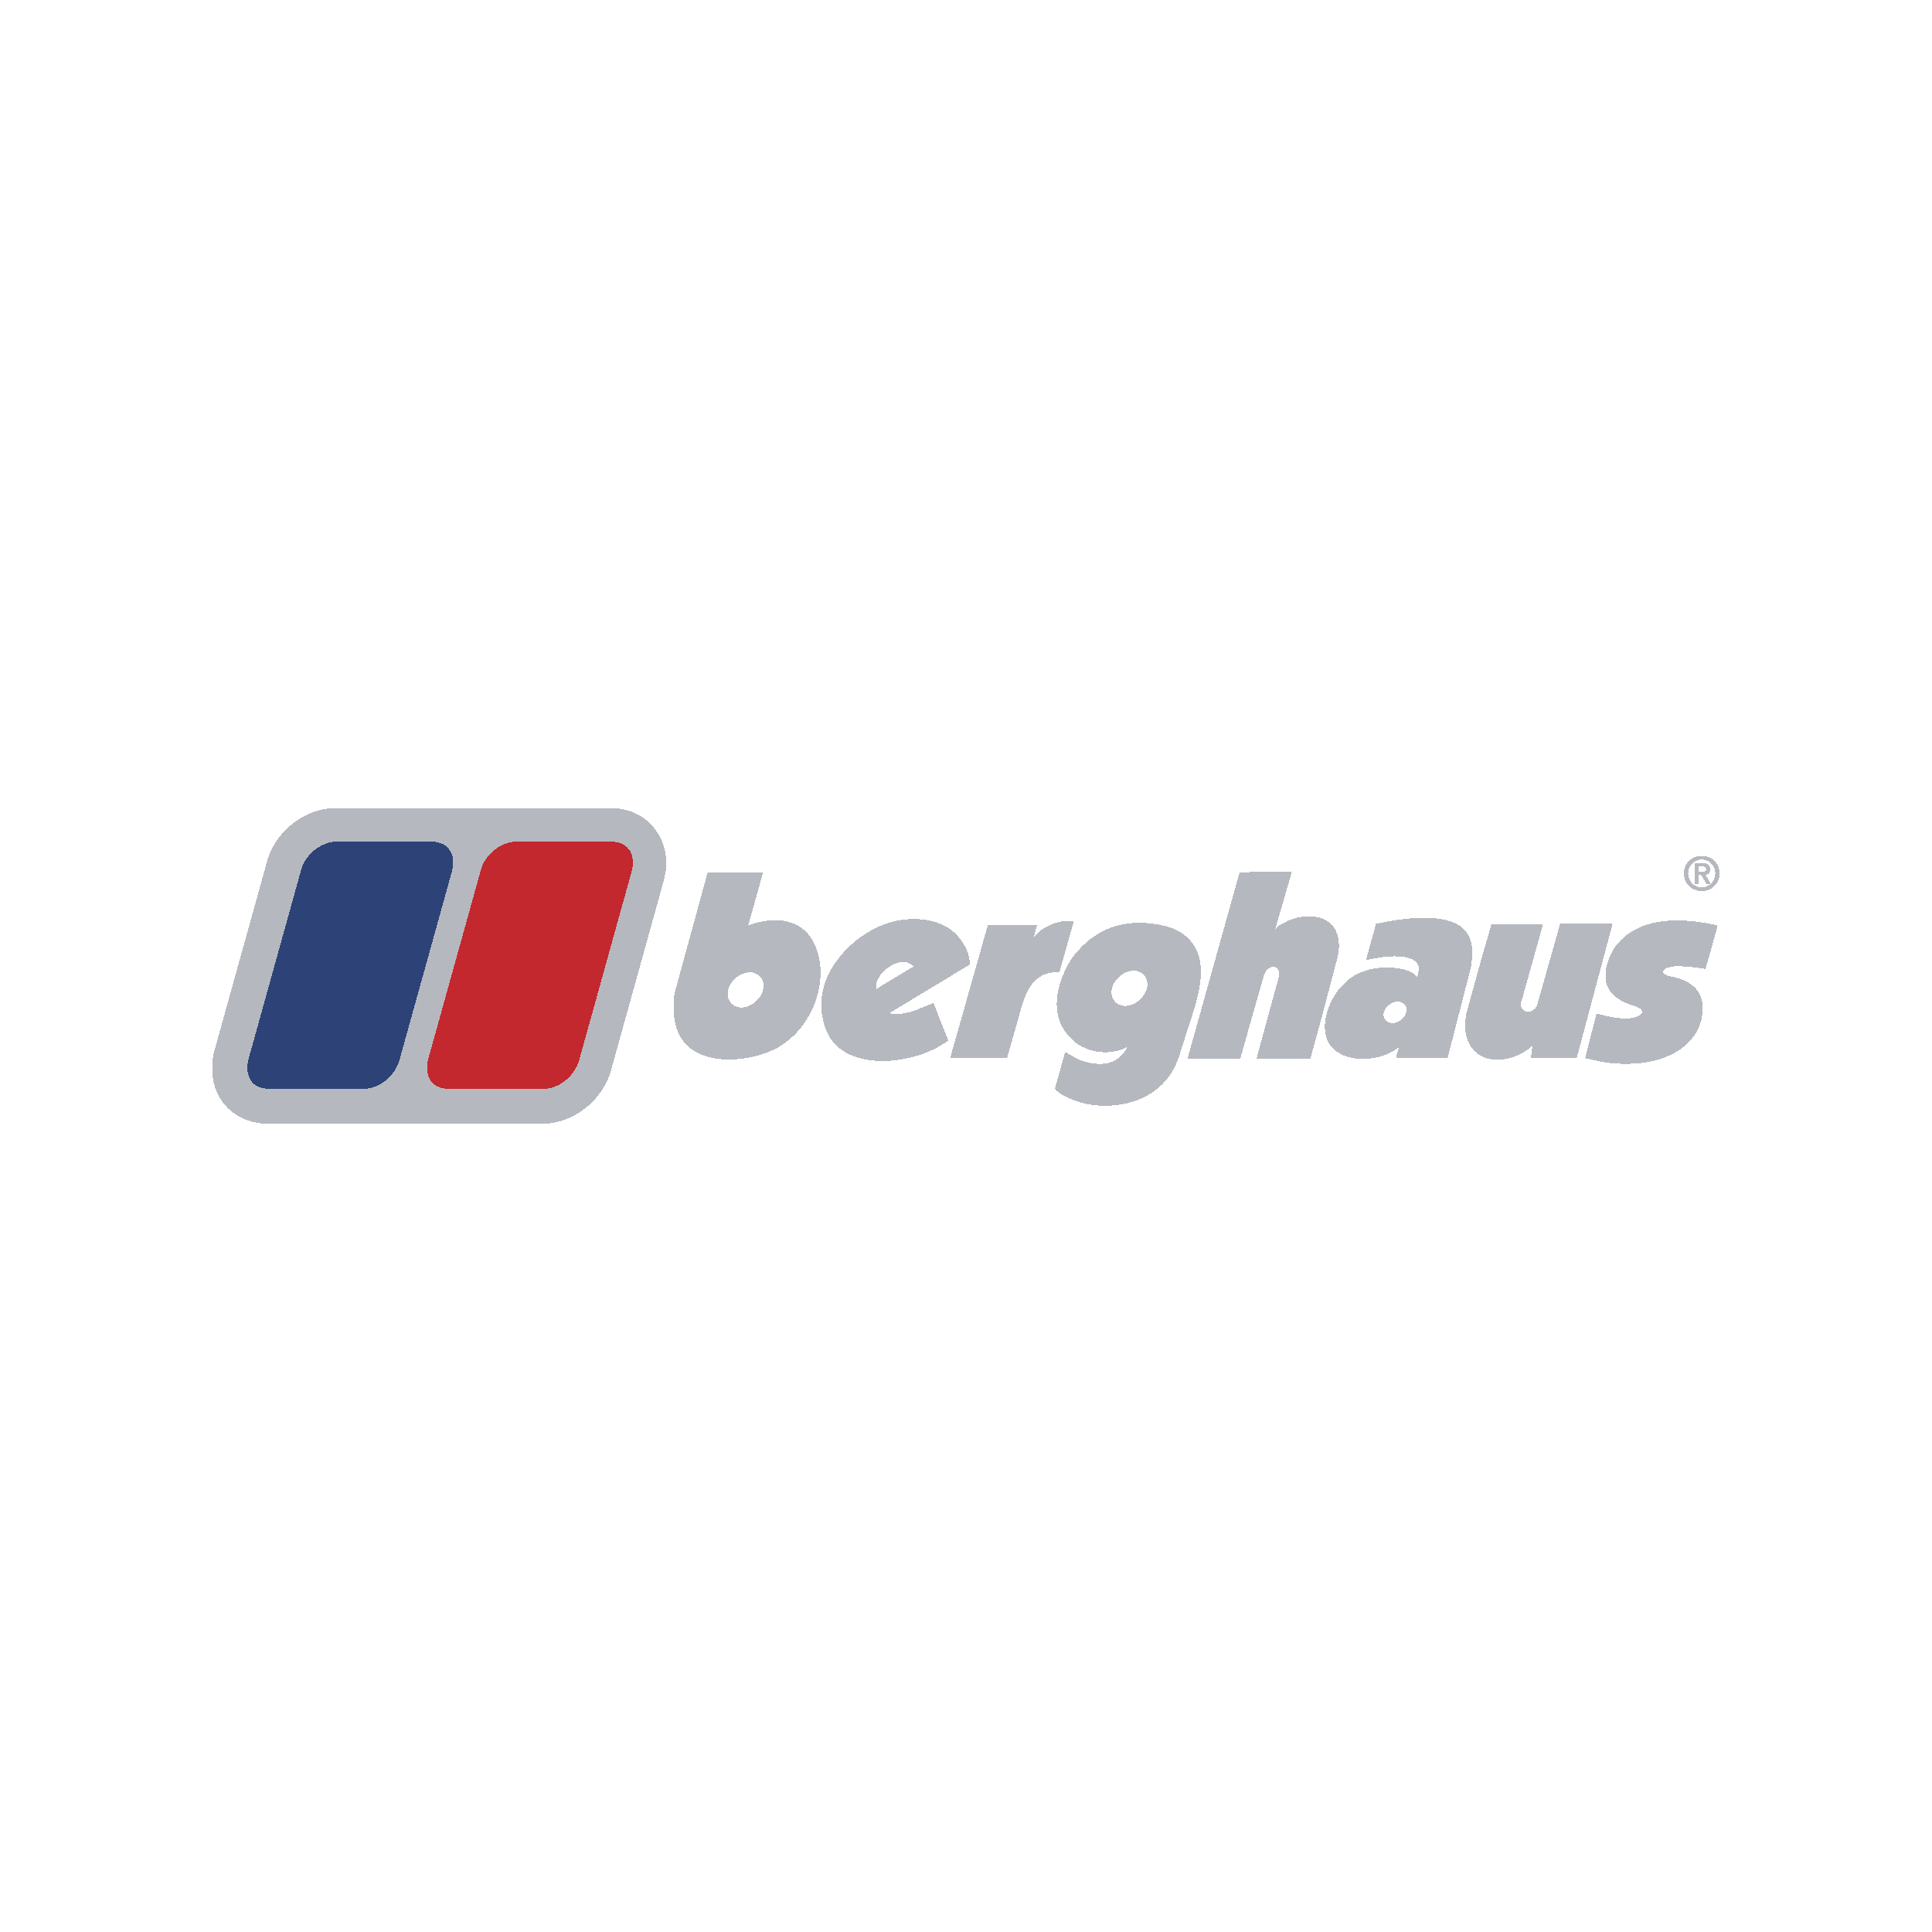 Berghaus Coupons & Promo Codes